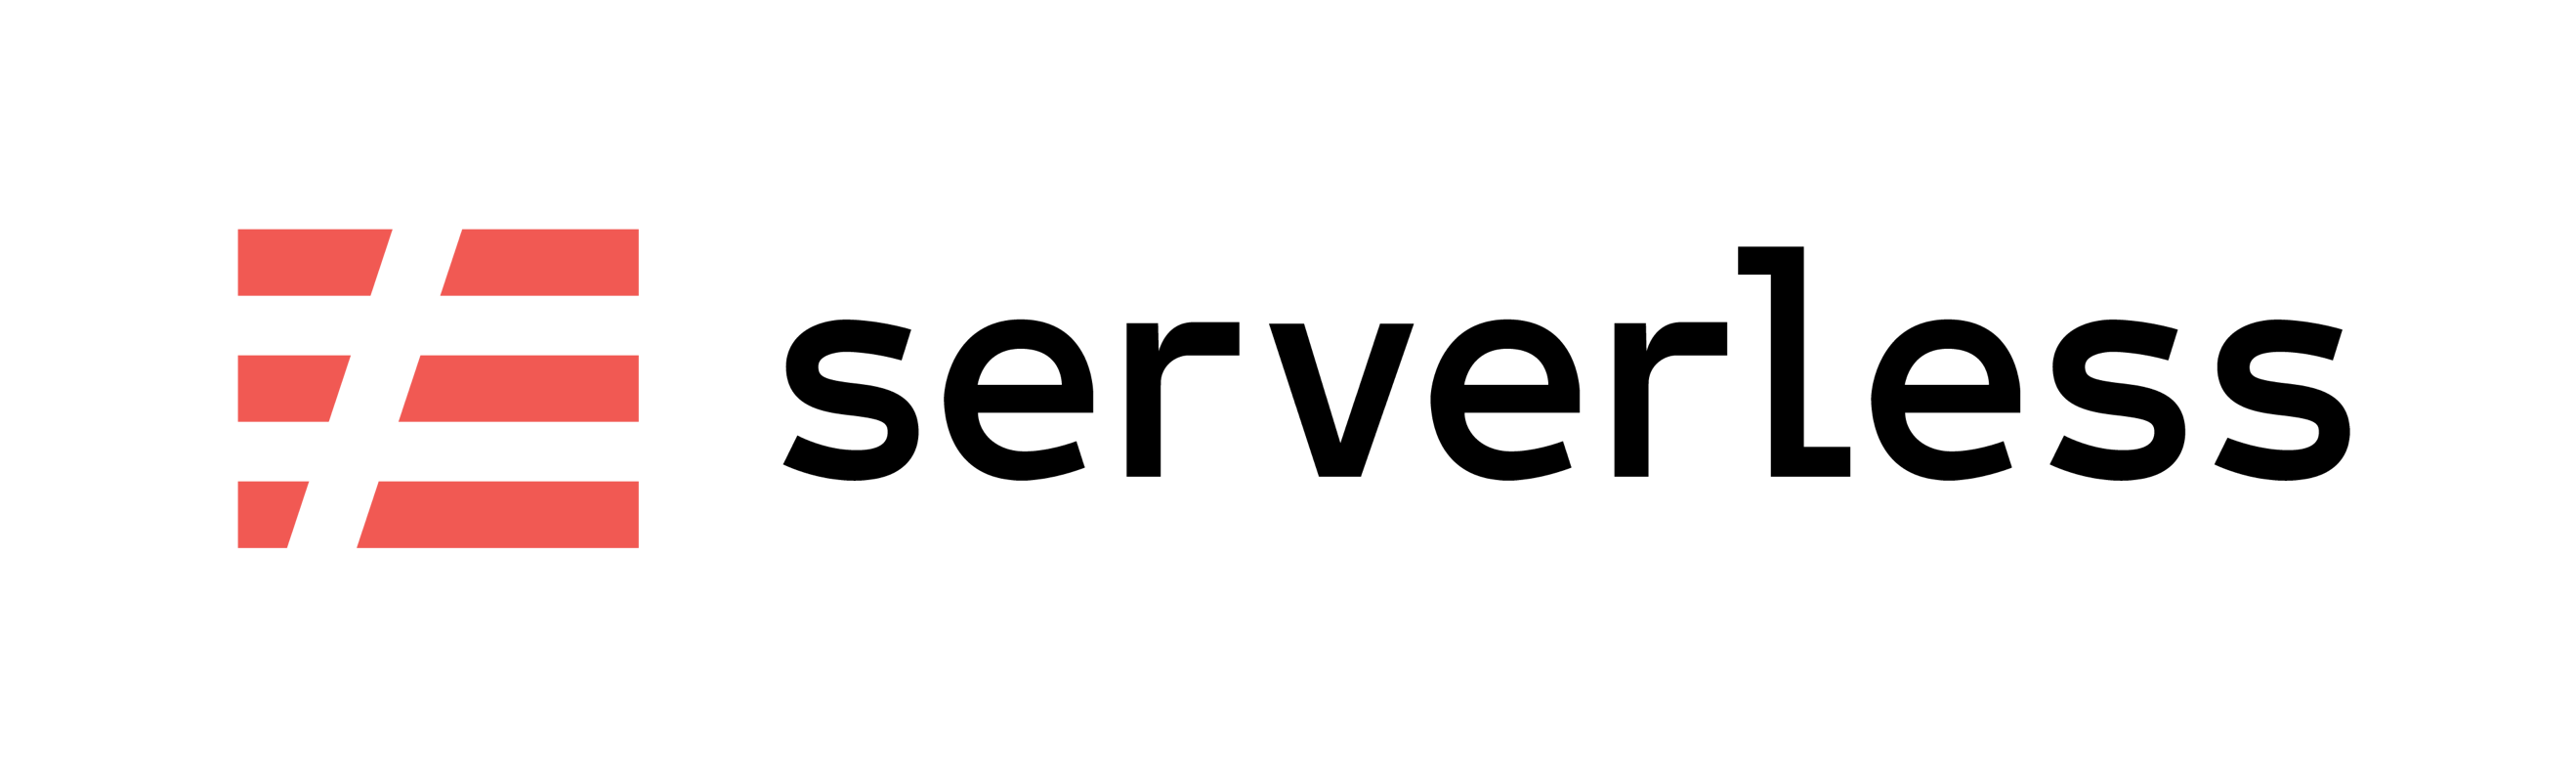 serverless framework logo